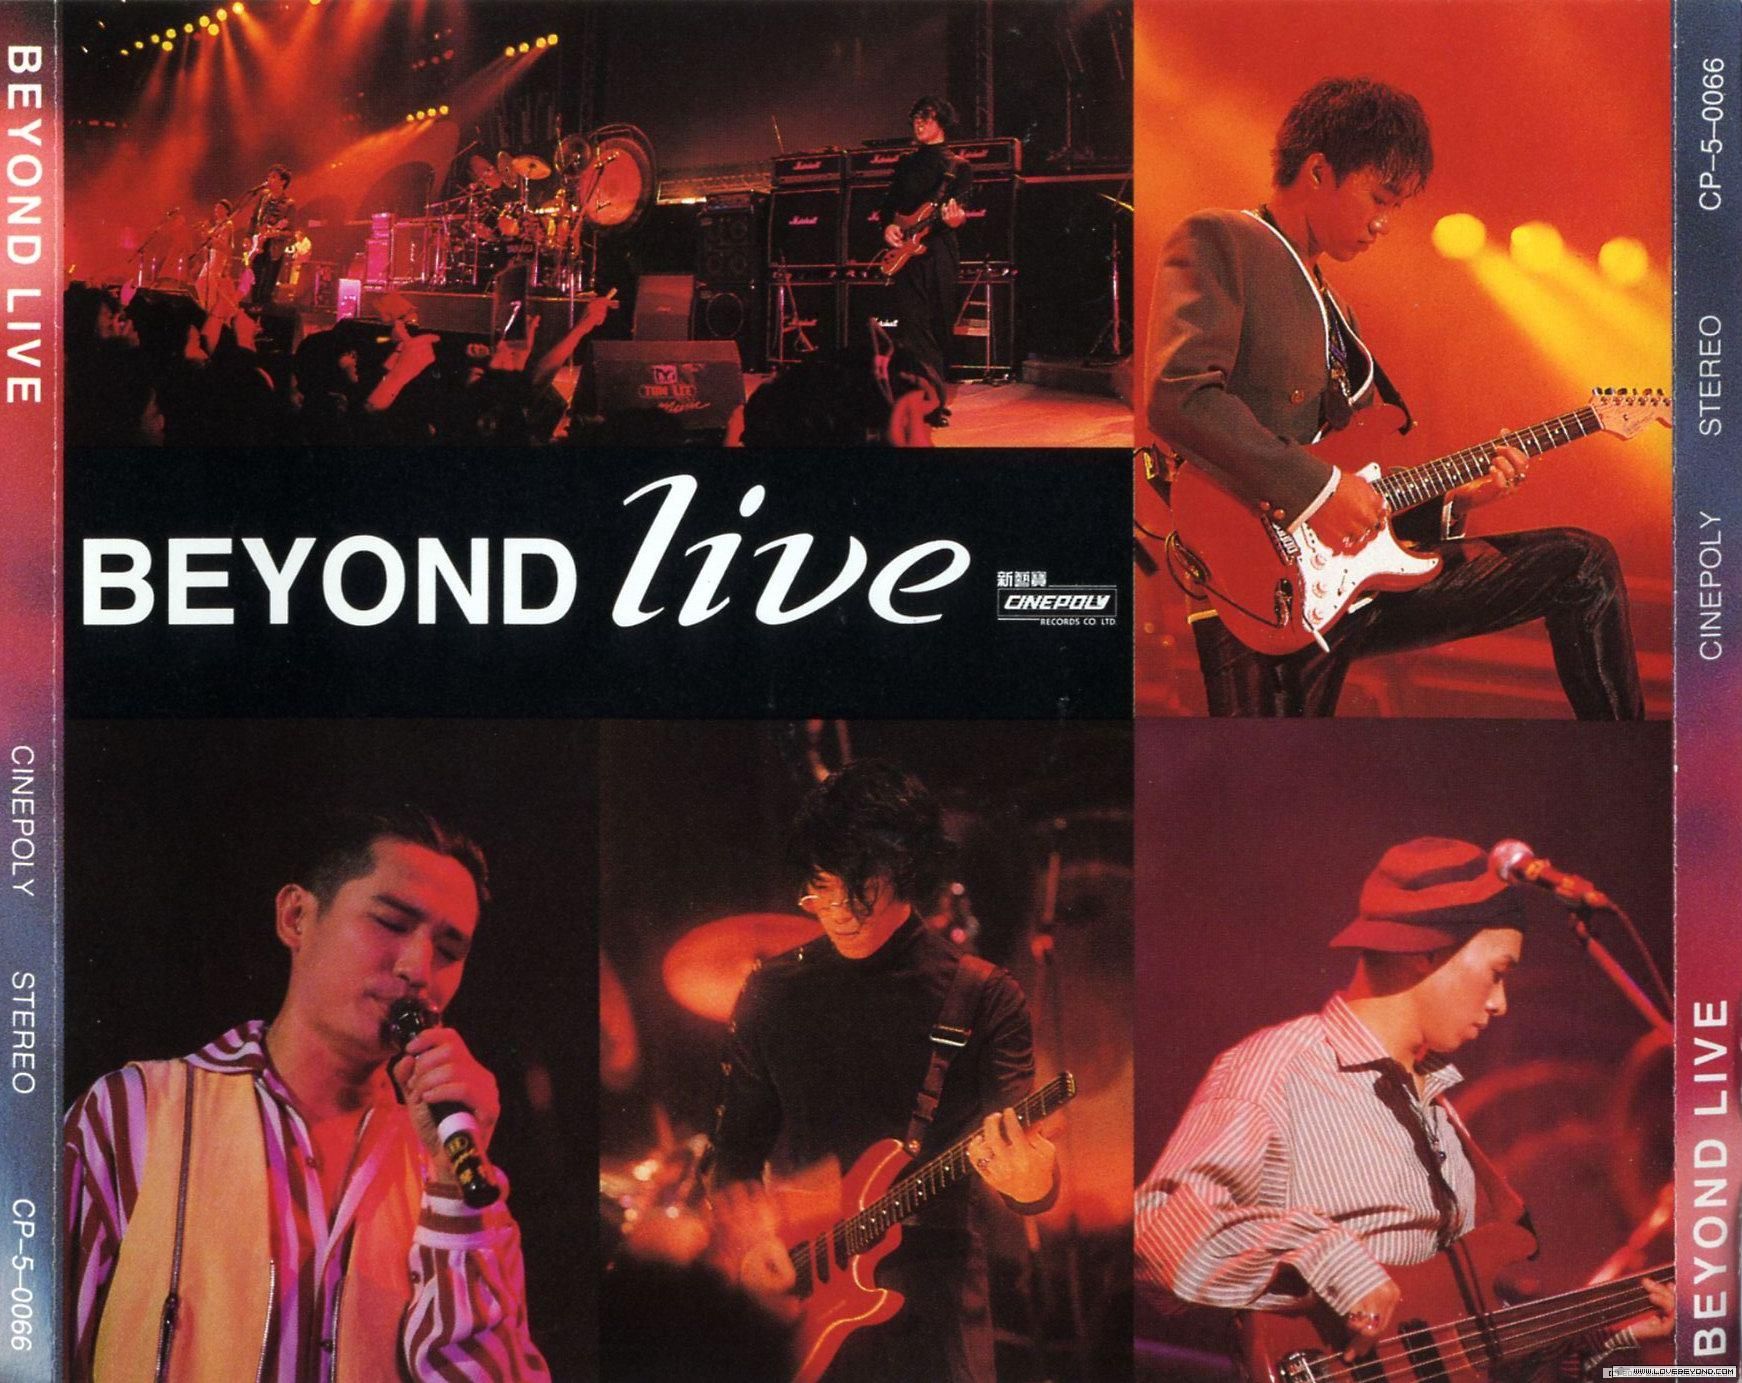 Beyond Live 1991 生命接觸演唱會(Beyond生命接觸演唱會)